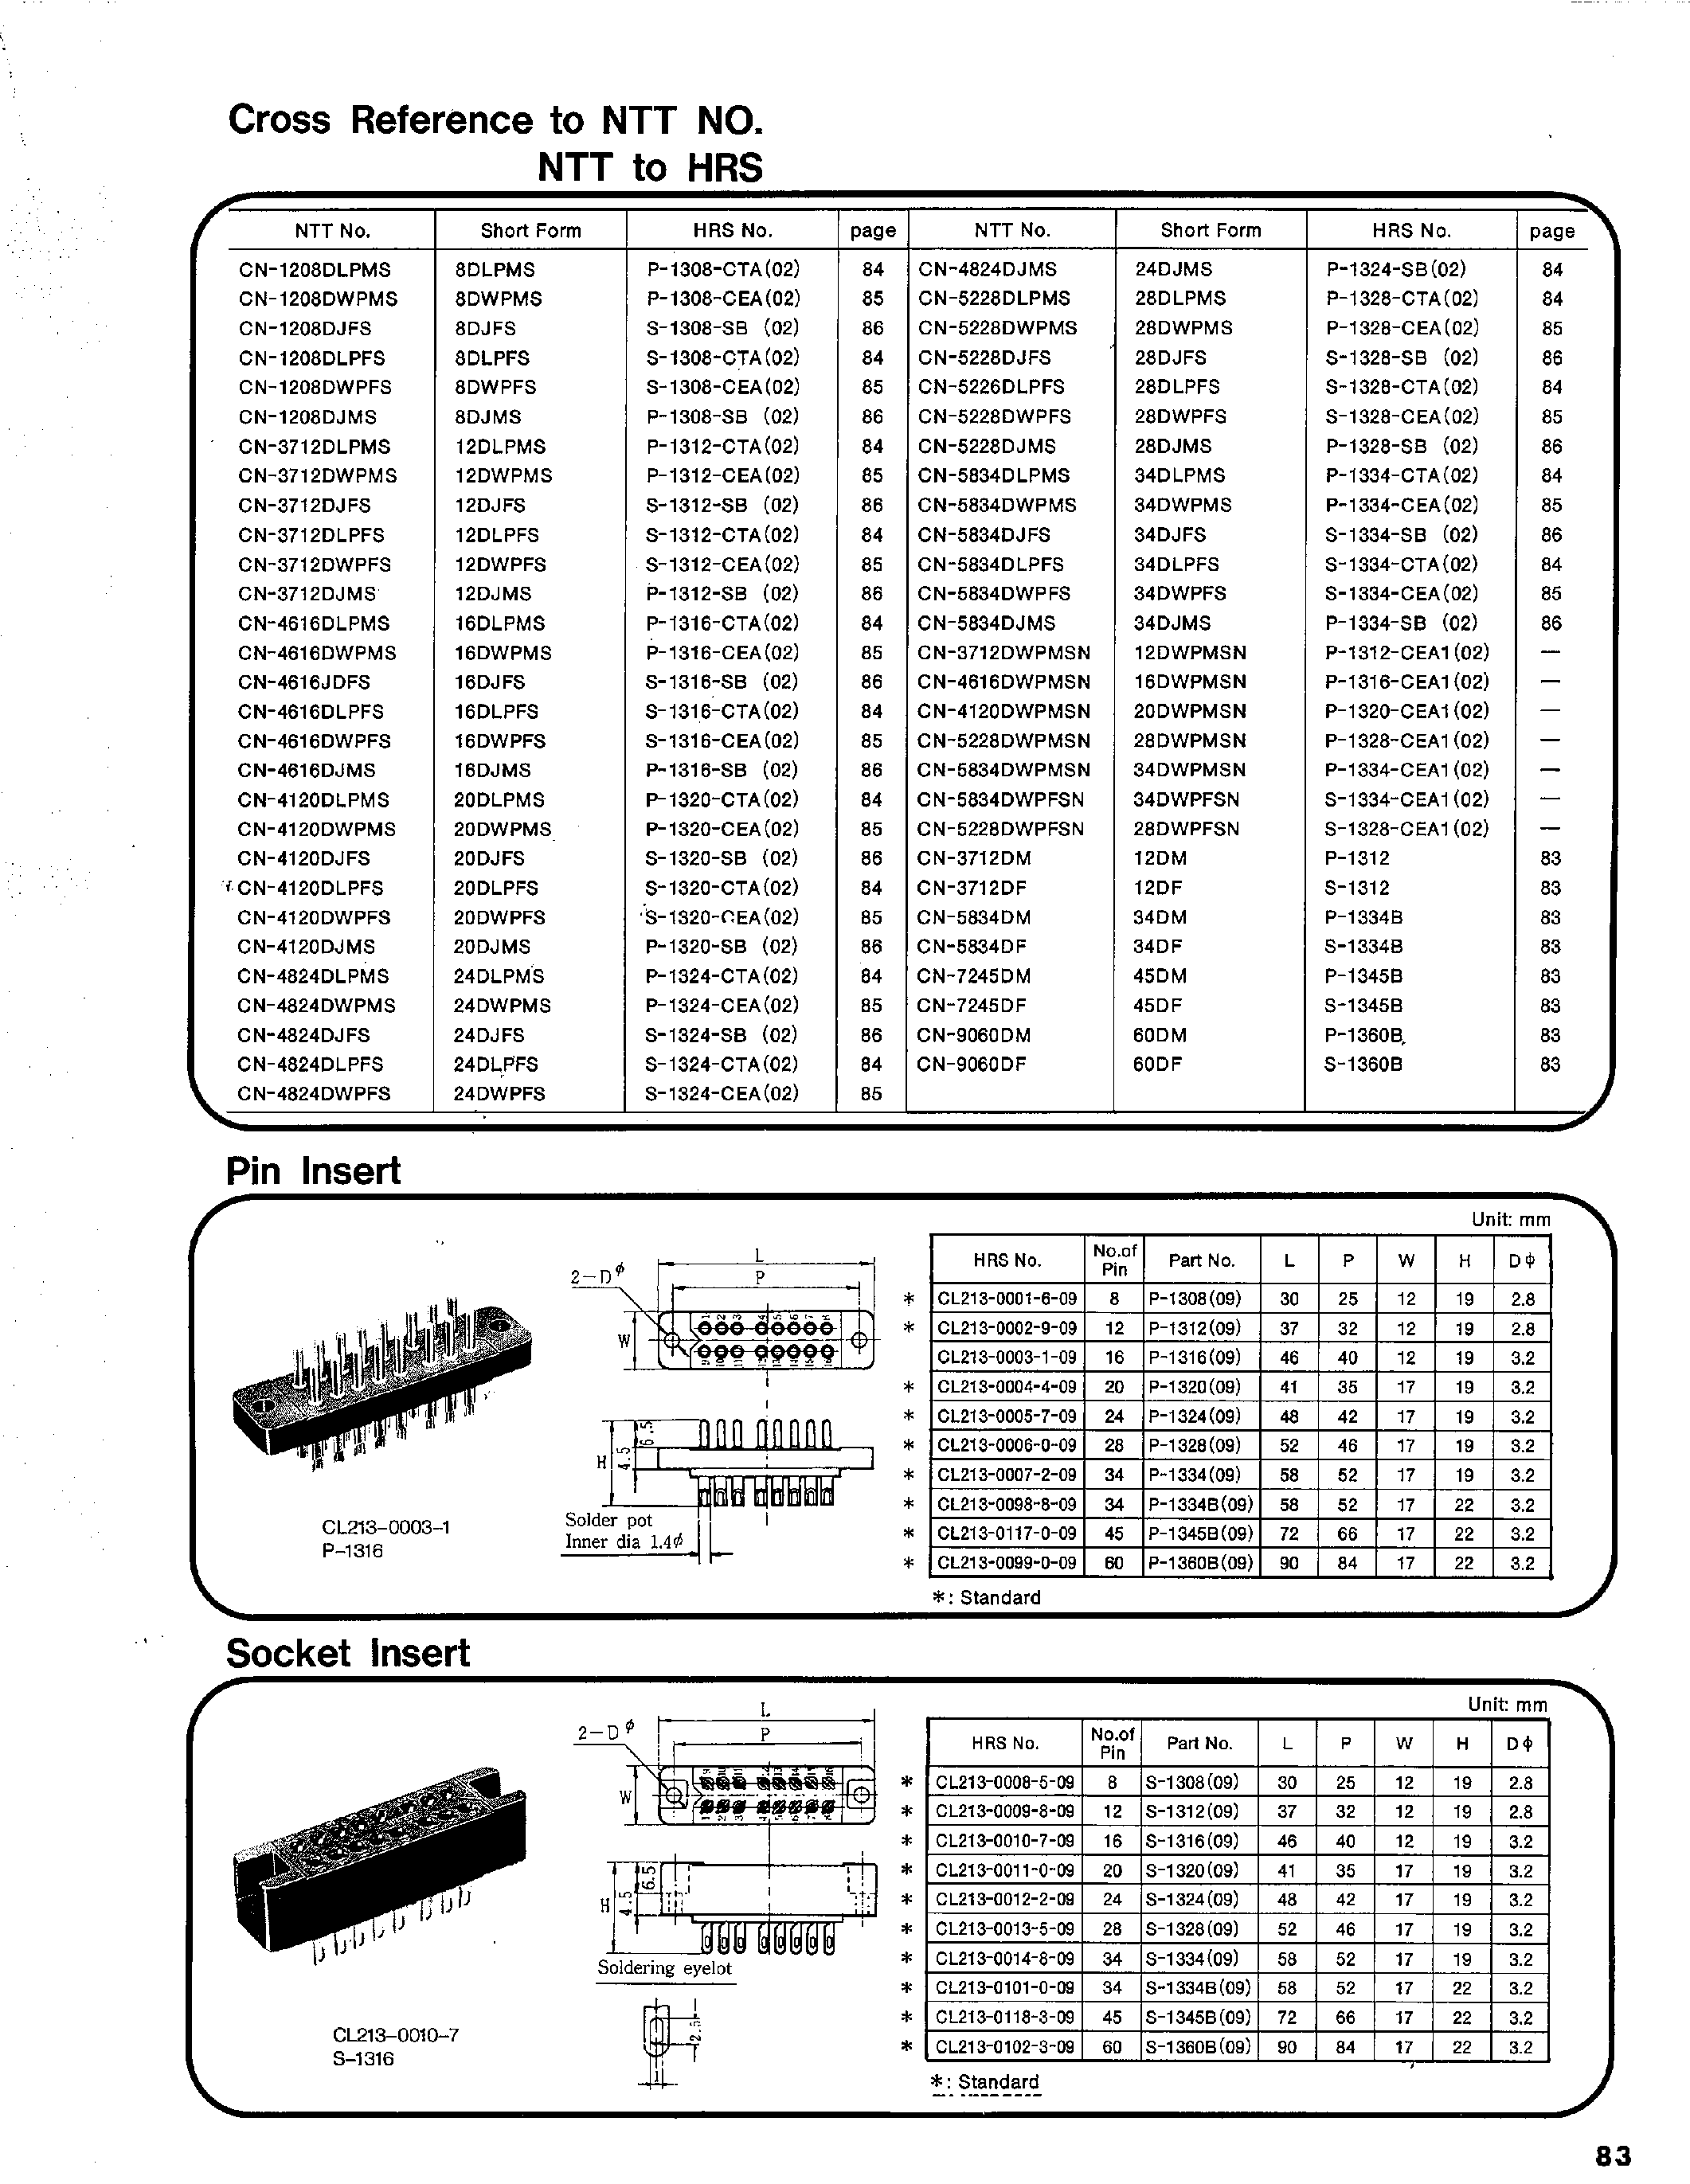 Datasheet P-1360-H - 1300 SERIES RECTANGULAR CONNECTORS page 2